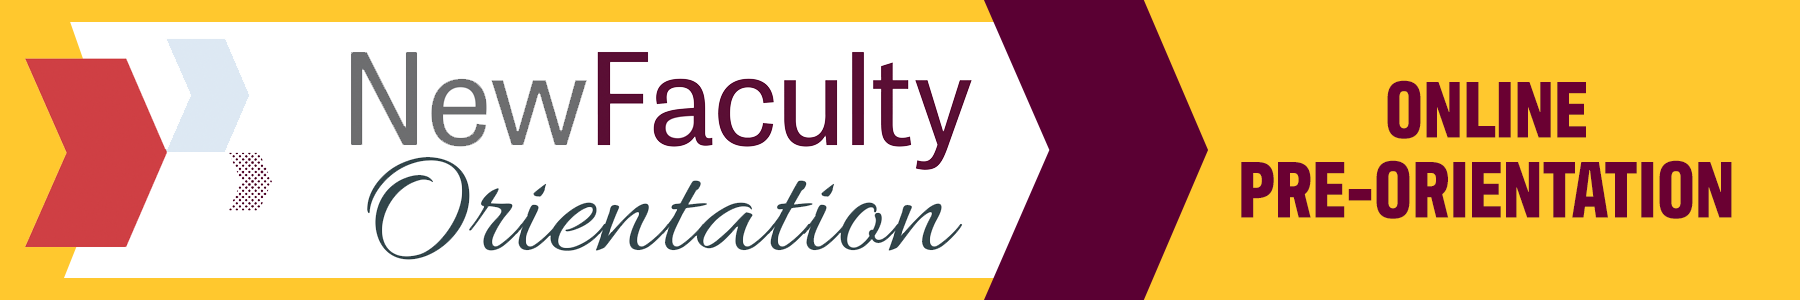 New Faculty Orientation - Online Pre-Orientation